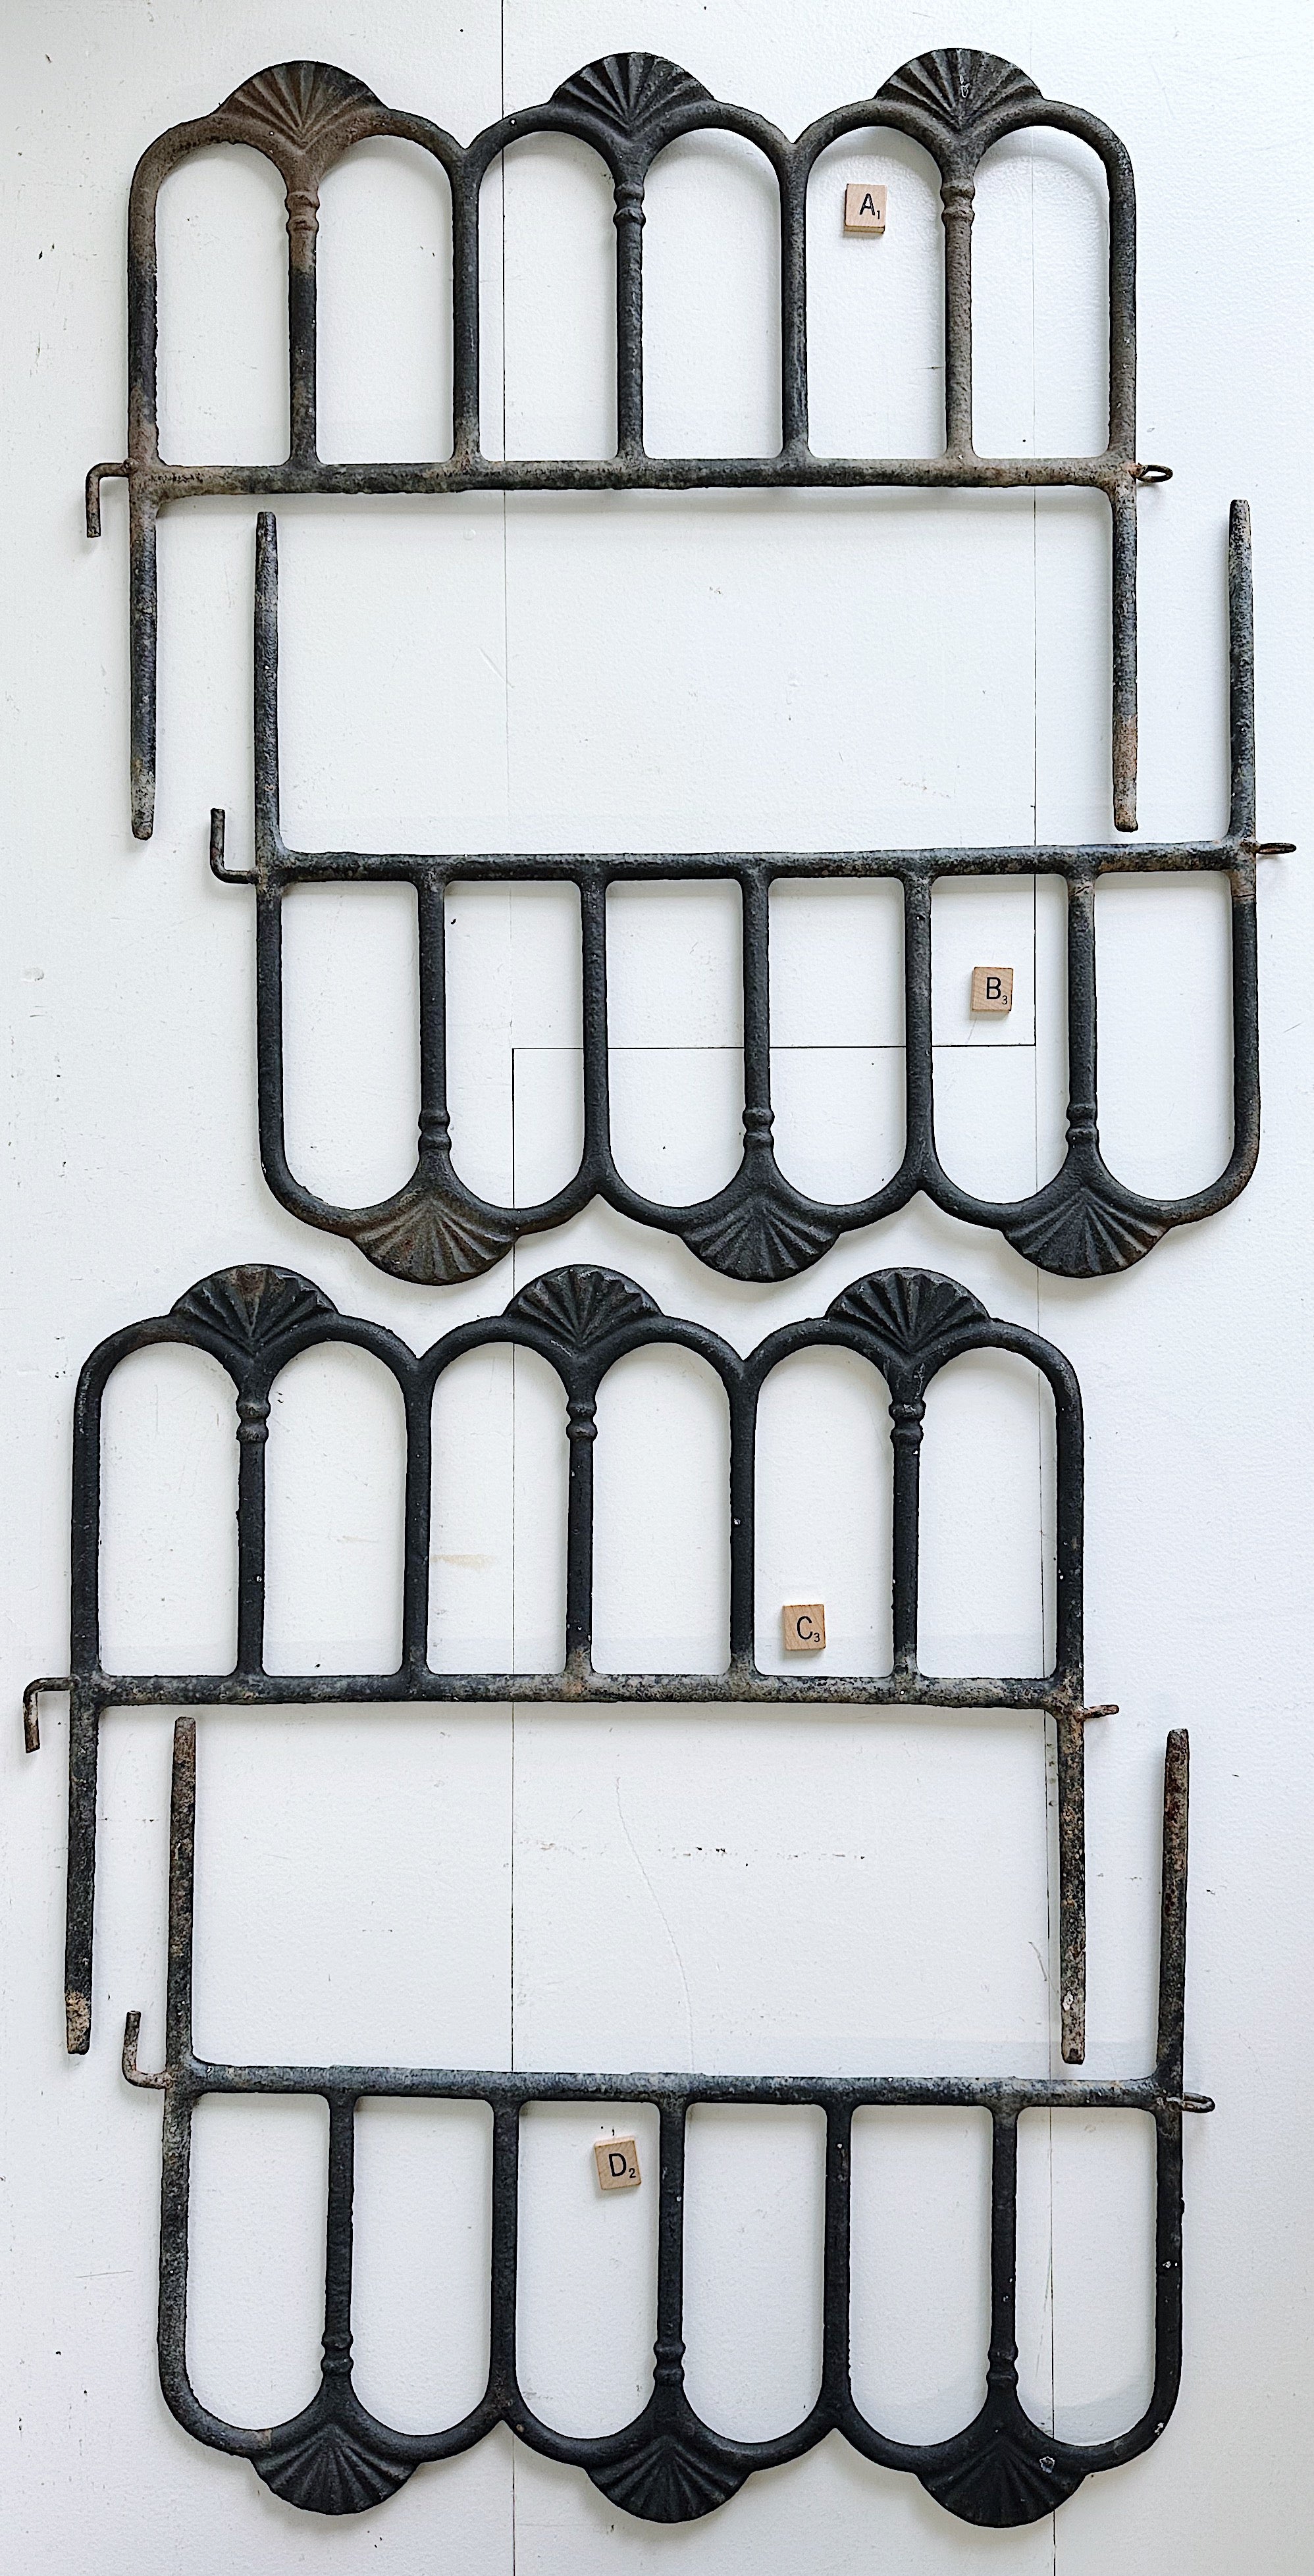 Antique Cast Iron Garden Fencing